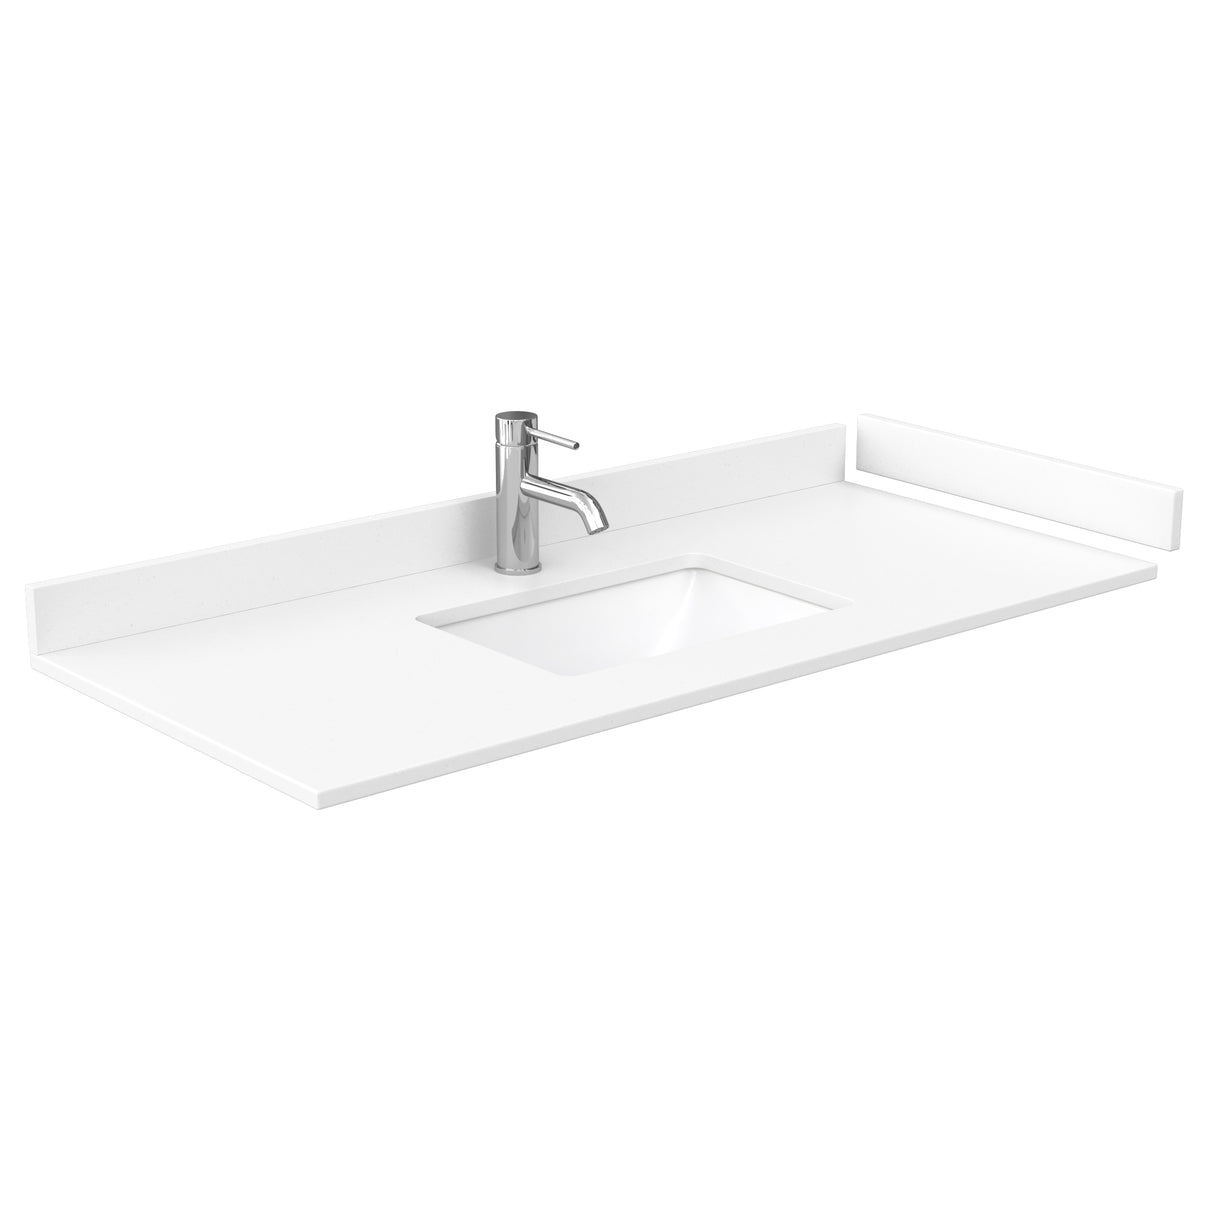 Daria 48 Inch Single Bathroom Vanity in White White Cultured Marble Countertop Undermount Square Sink 46 Inch Mirror